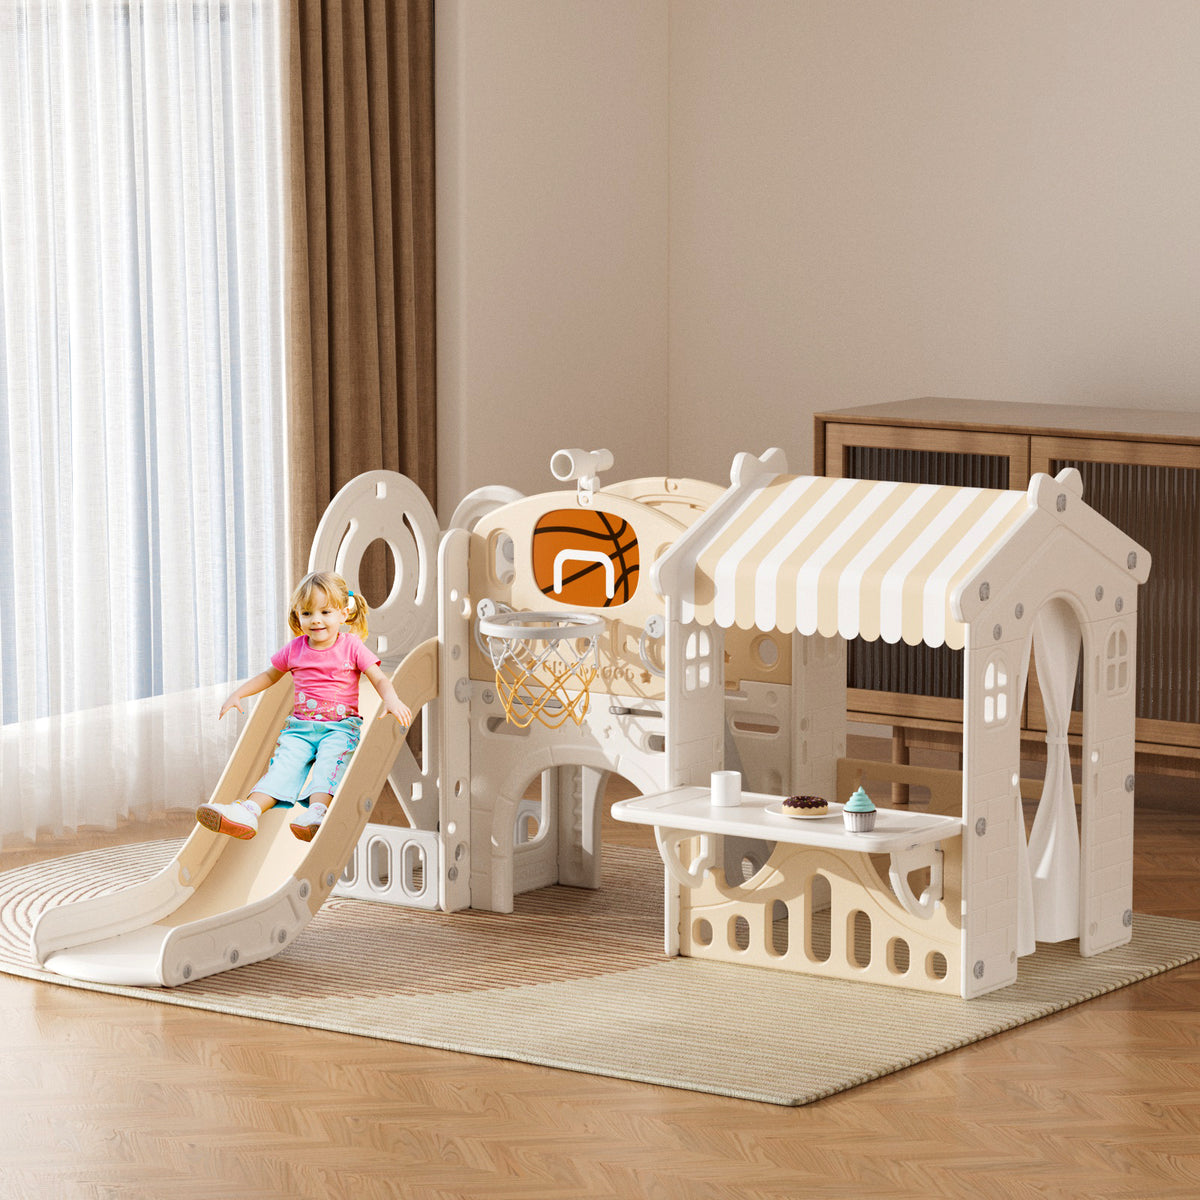 XJD 10 in 1 Toddler Slide with house Indoor and Outdoor Plastic Freestanding Slide, Coffee